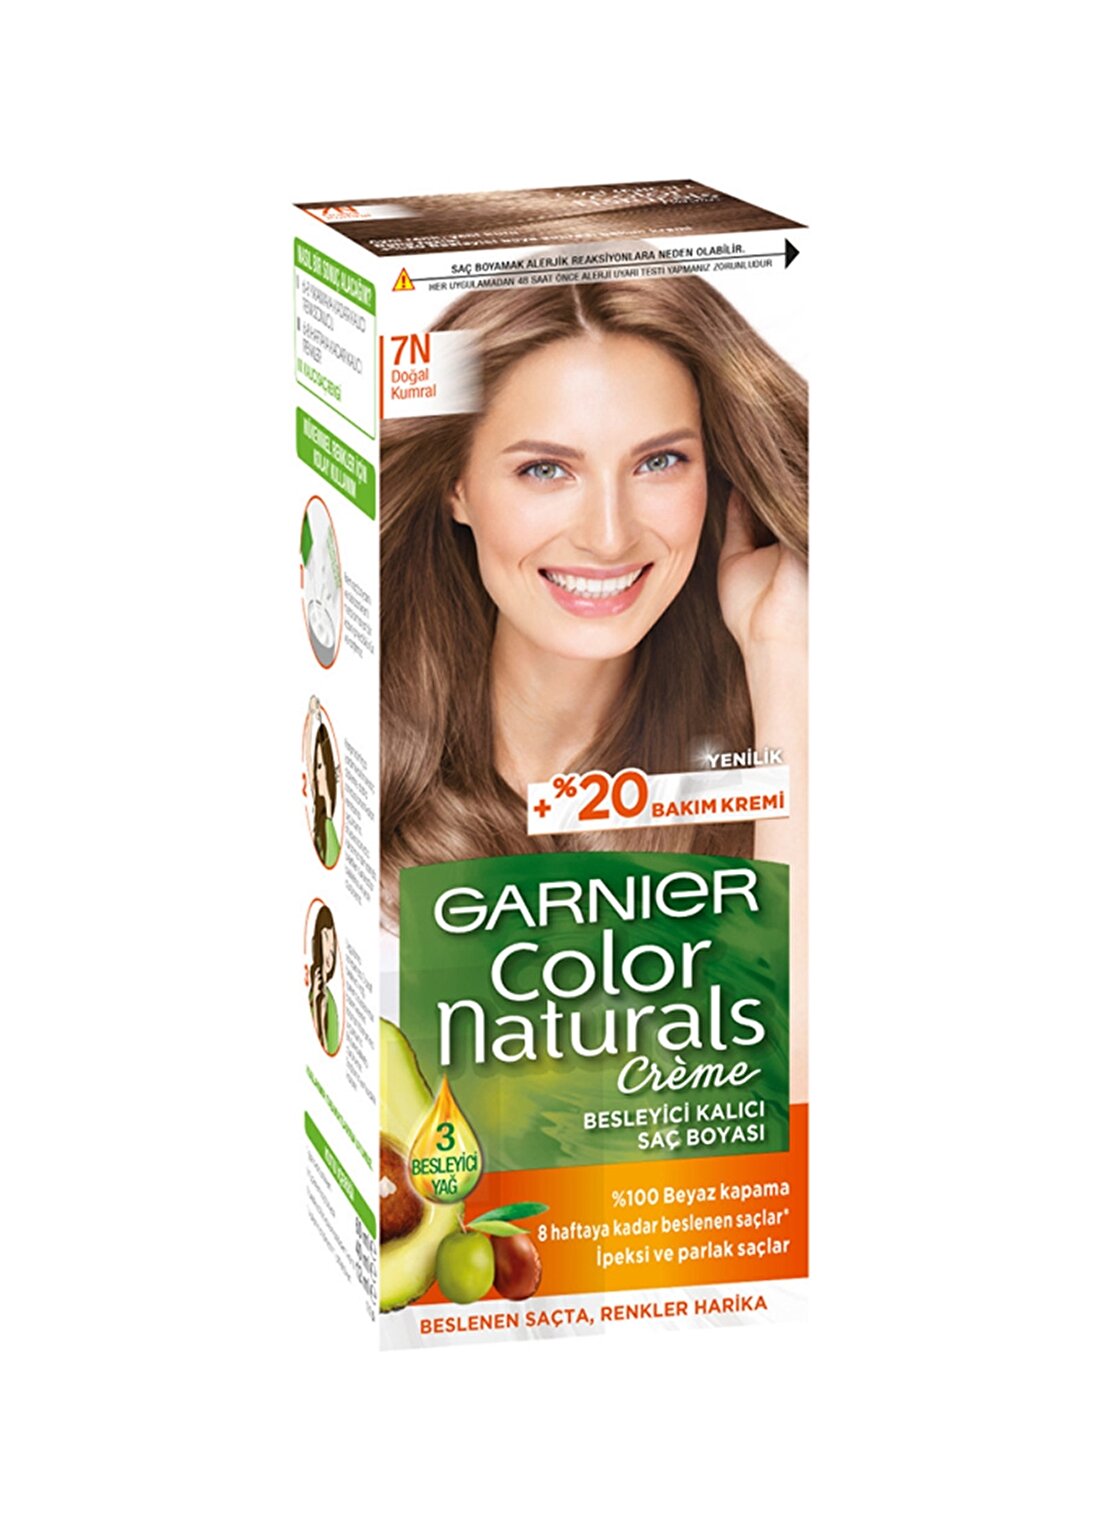 Garnier Color Naturals - 7N Doğal Kumral Saç Boyası